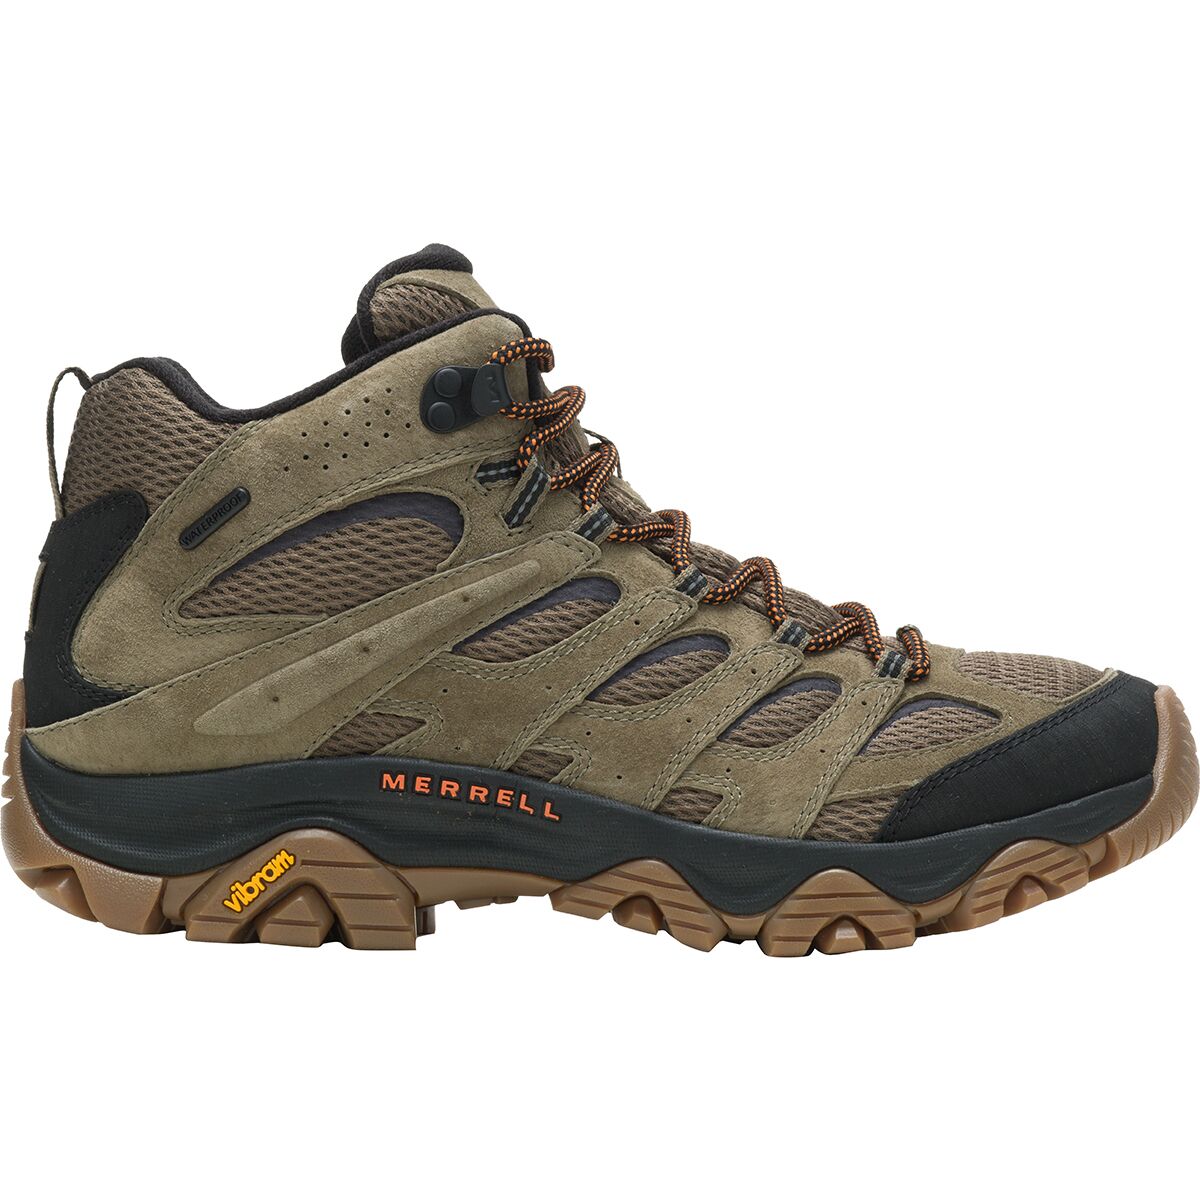 Merrell Moab 3 Mid Waterproof Hiking Boot - Men's